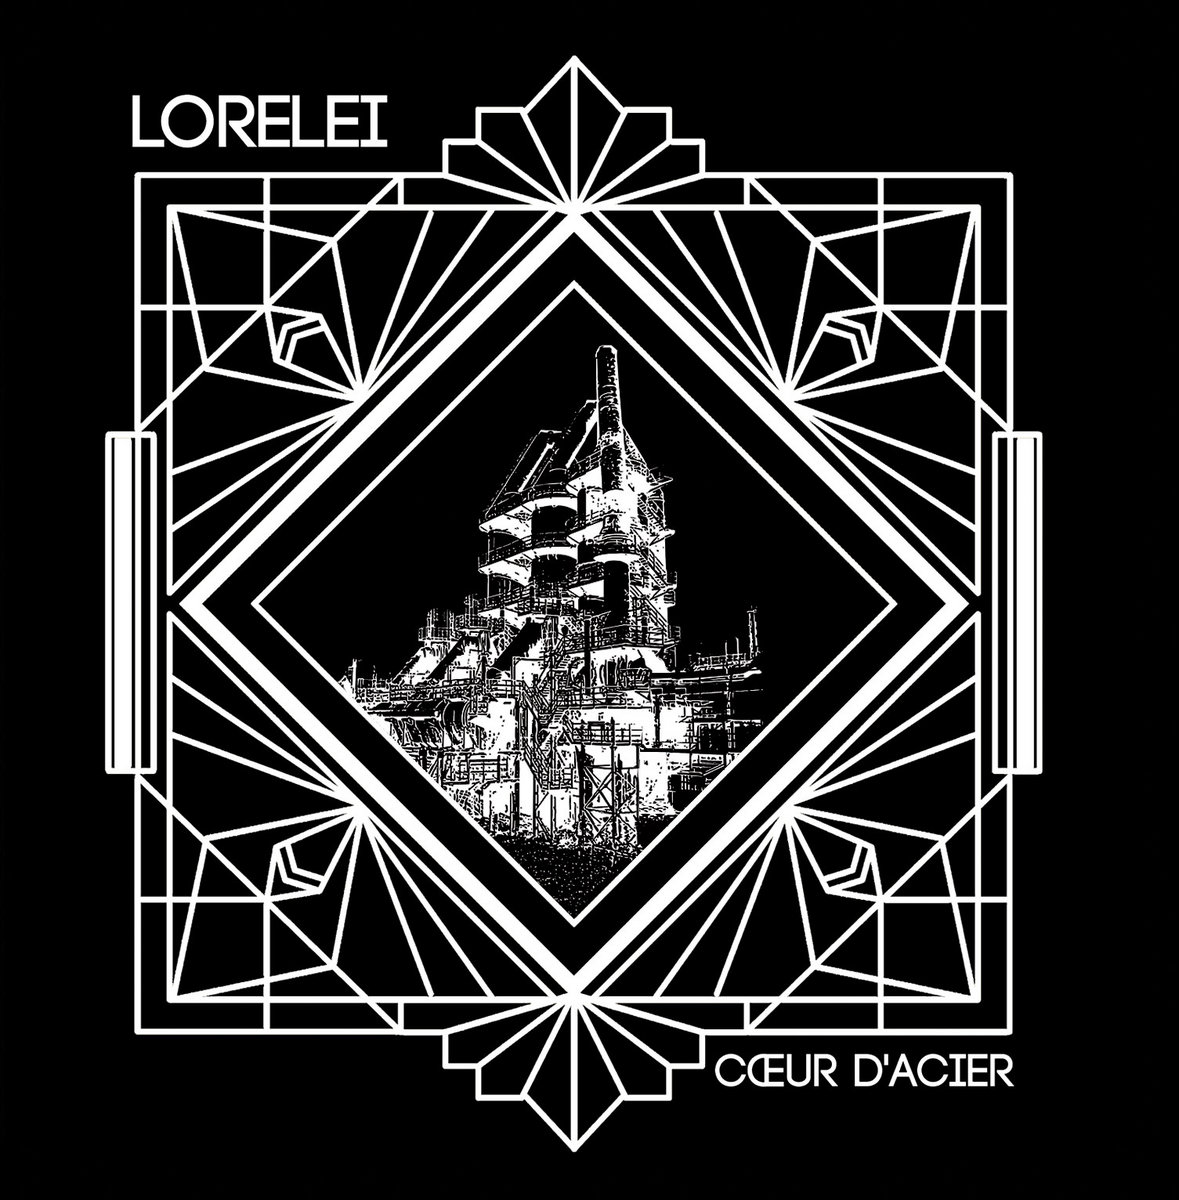 LORELEI "Coeur d'acier" - LP + CD